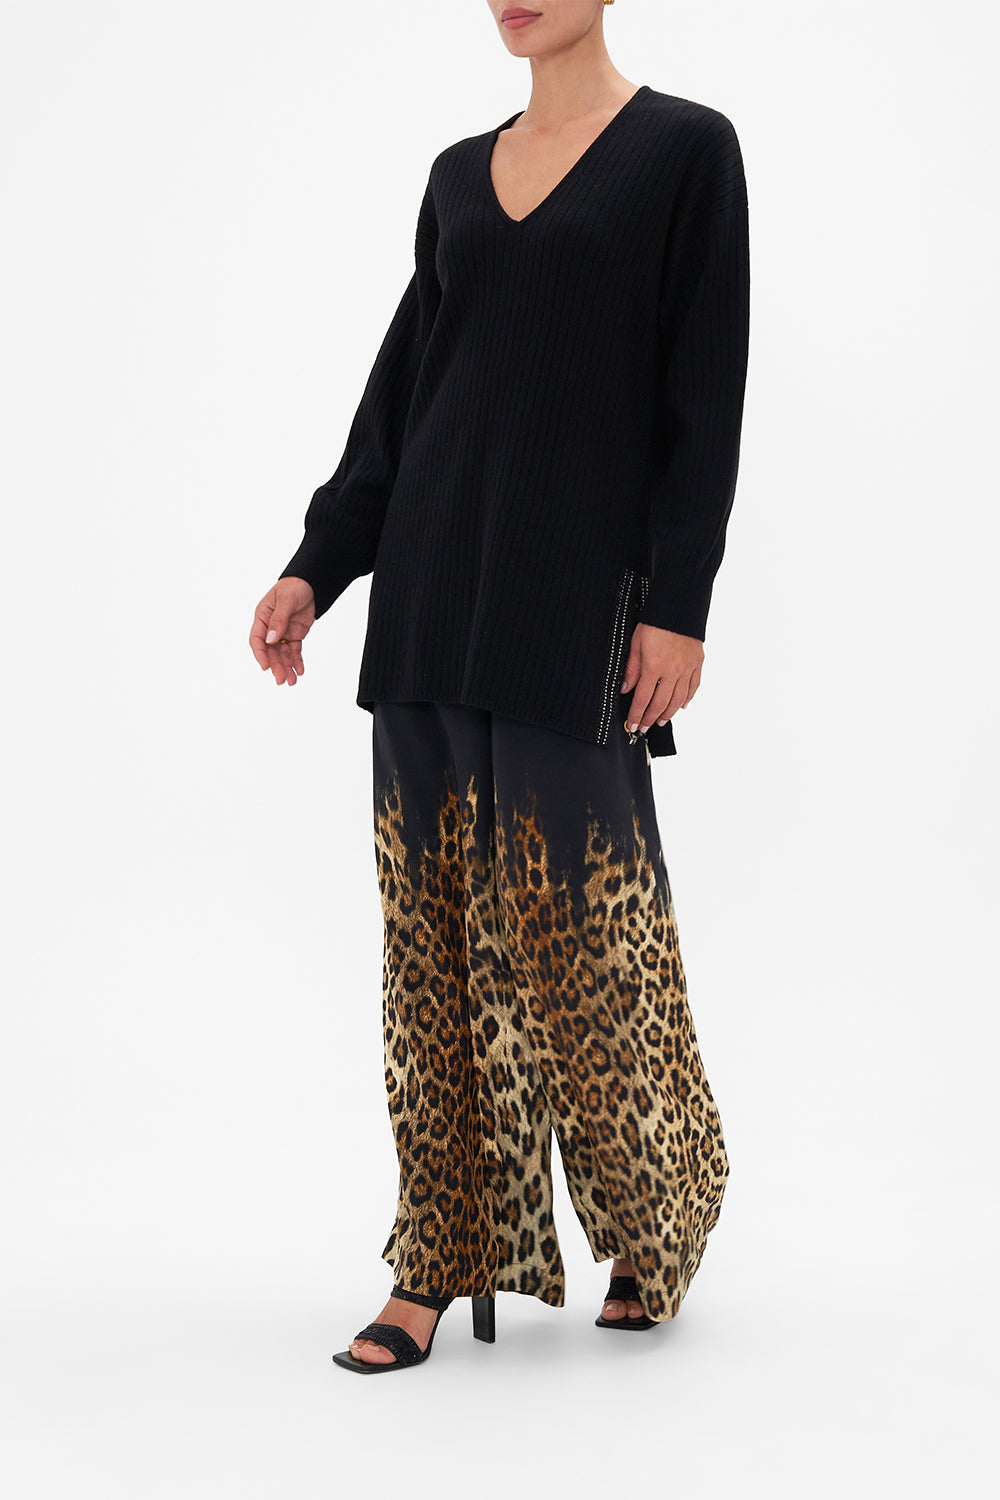 Side view of model wearing  CAMILLA black v neck wool cashmere knit jumper in Lions Mane print